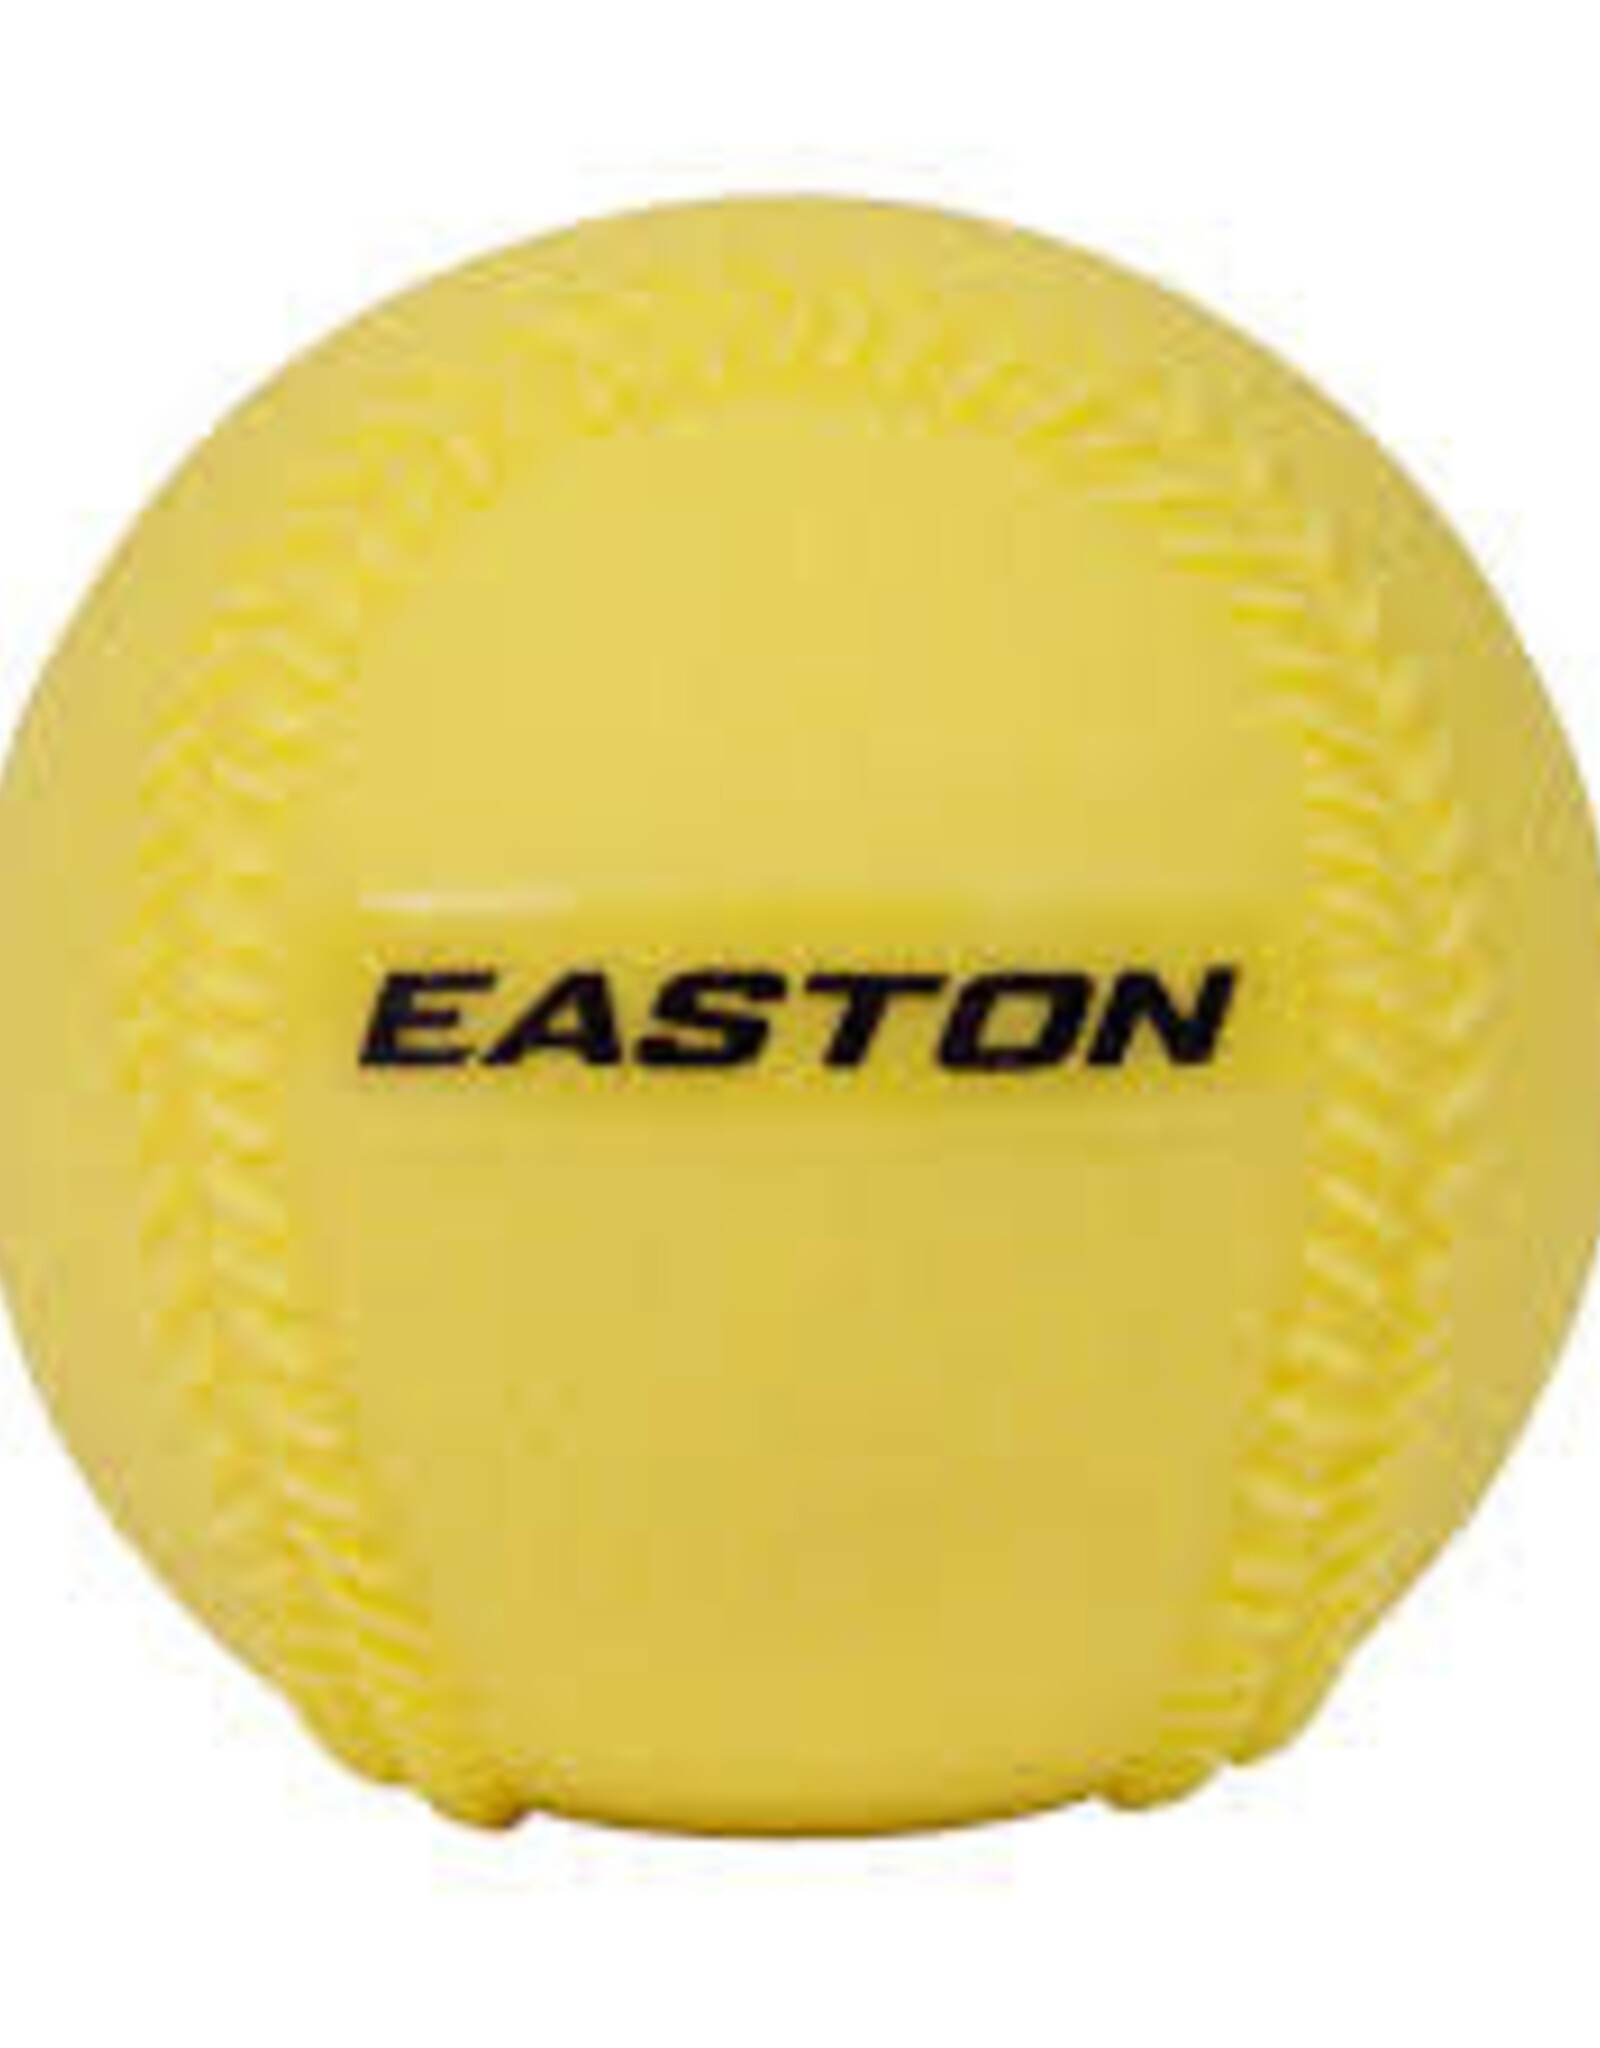 Easton Heavy Training Ball-3 Pack